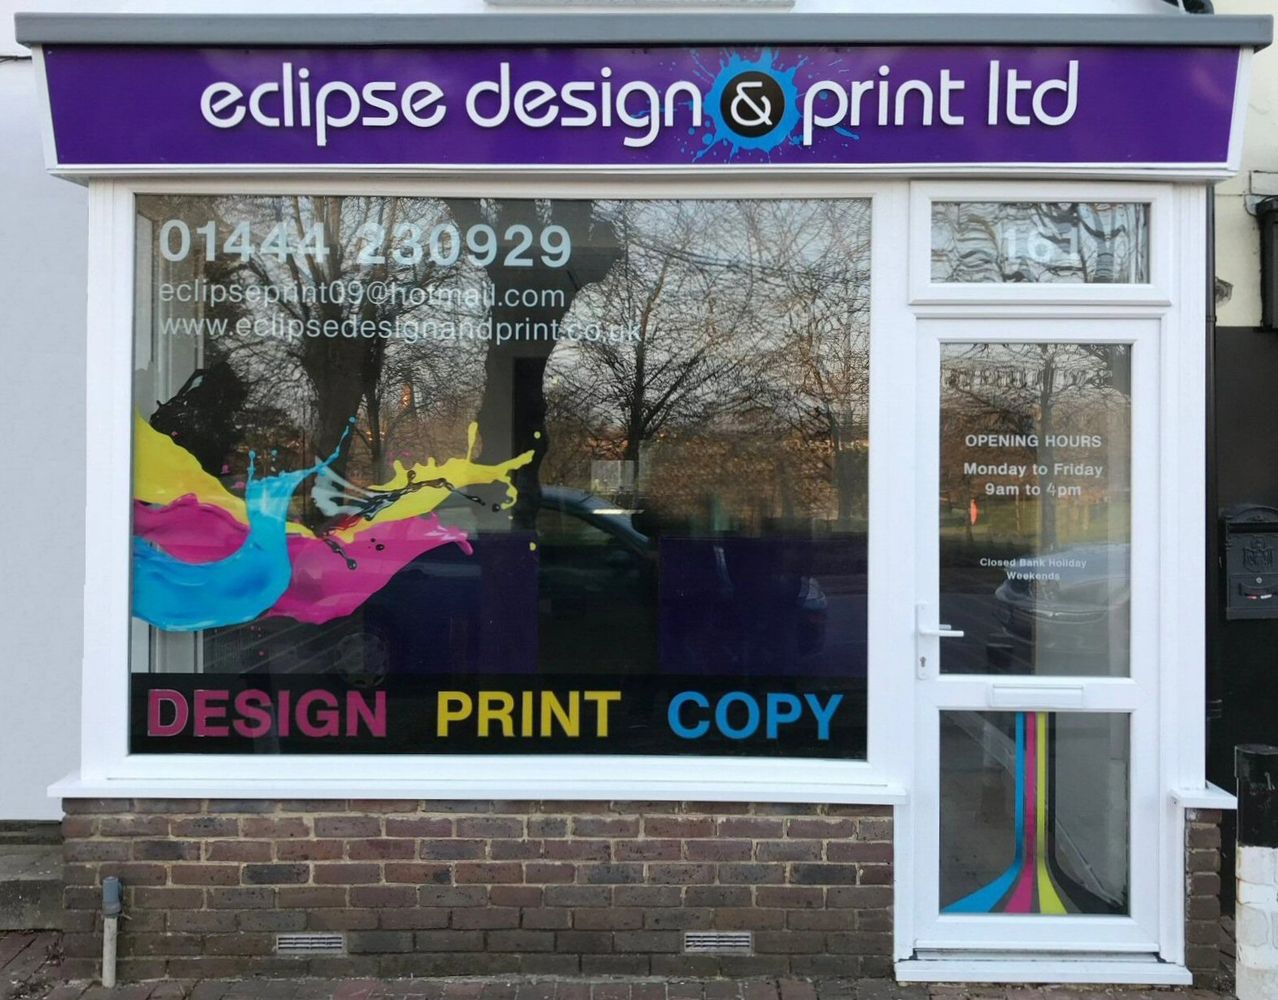 Eclipse Design and Print Ltd
Burgess Hill
West Sussex
RH15 8LH